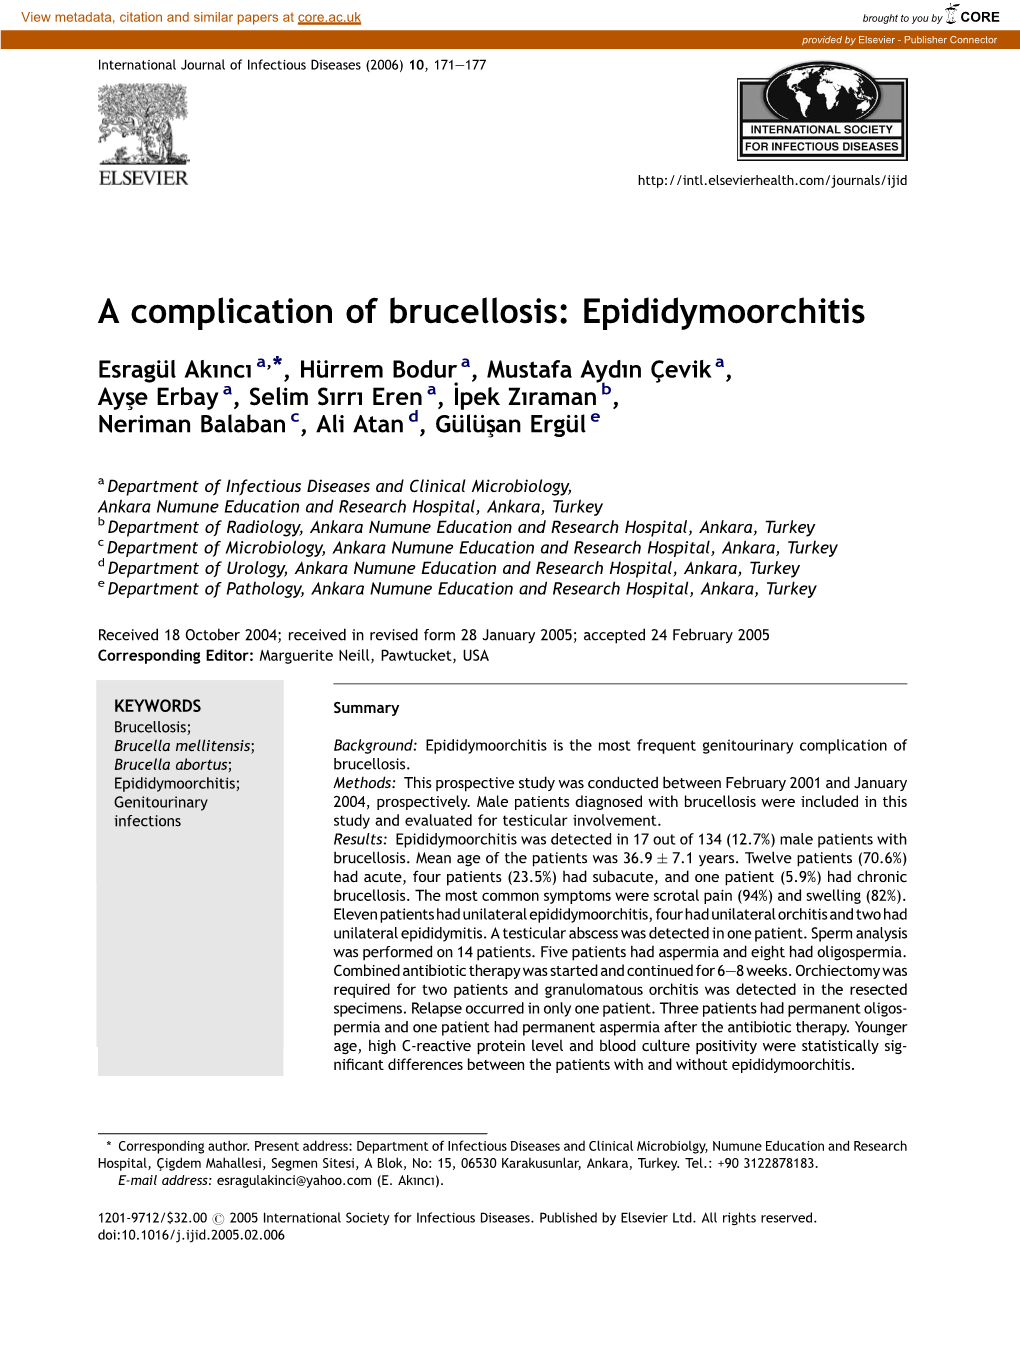 A Complication of Brucellosis: Epididymoorchitis